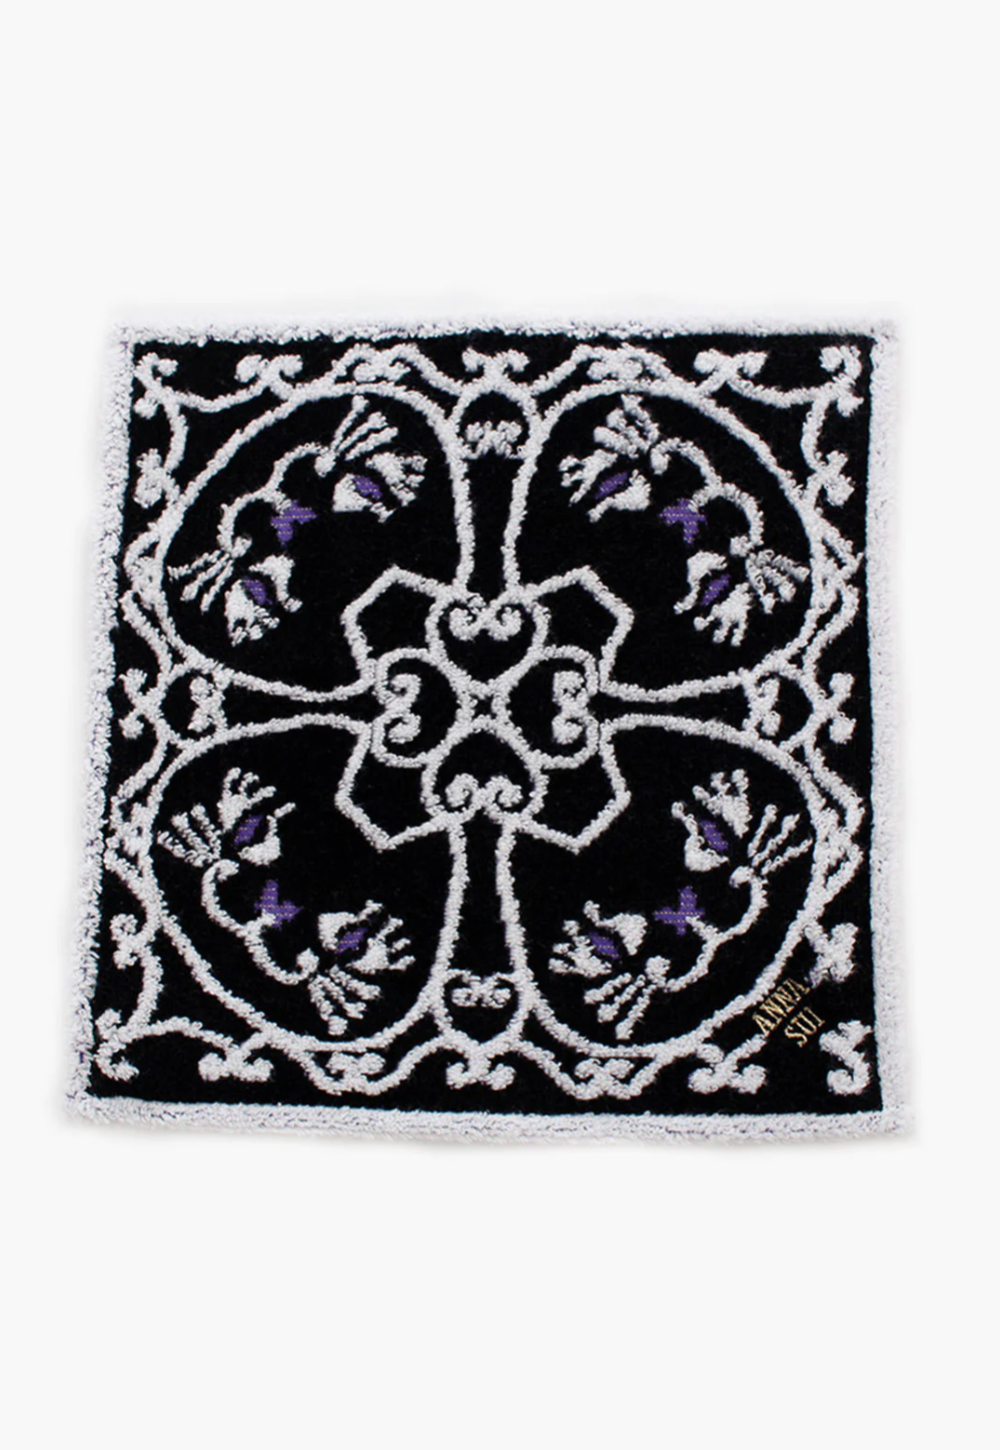 Cat Pattern Washcloth in black, 4 white/purple cat in a clover frame,  Anna Sui's label in corner 